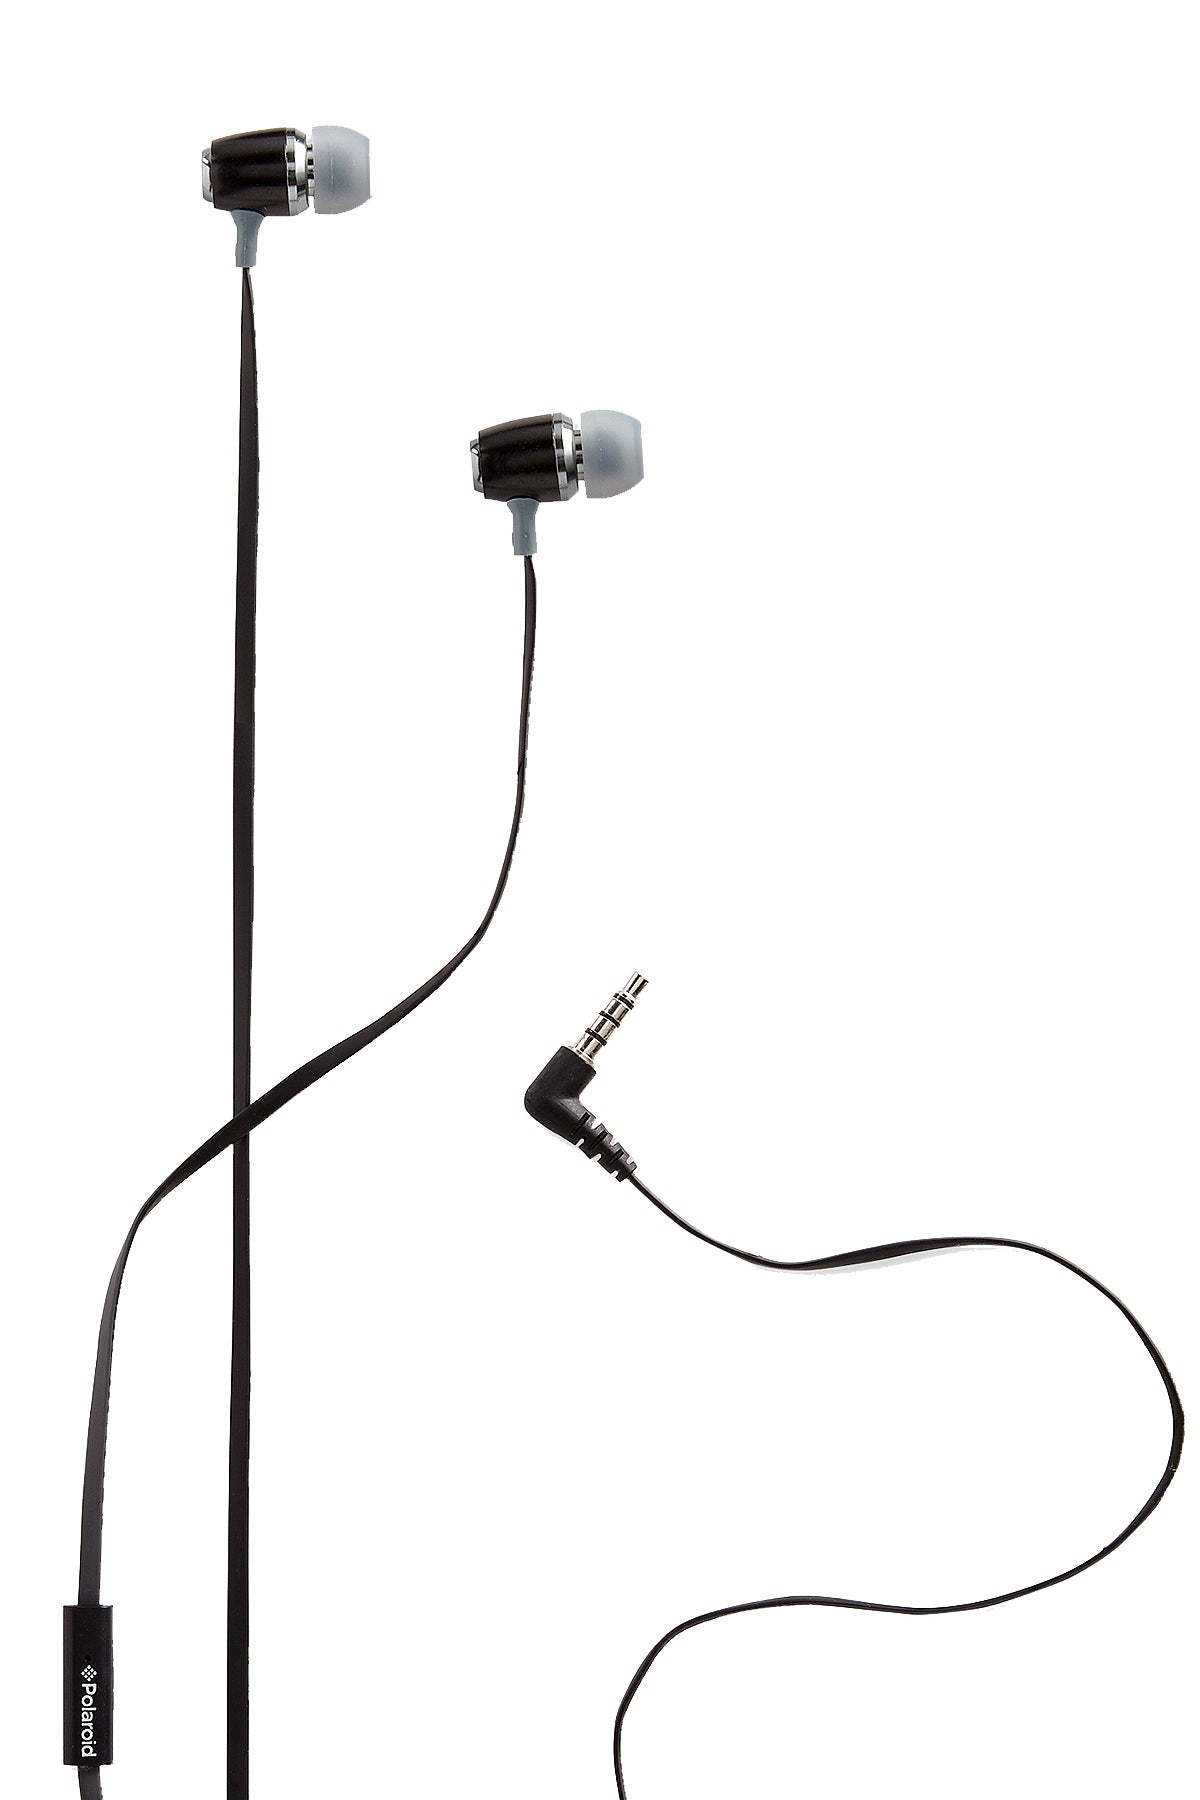 Polaroid Black Metallic Premium Sound Earbuds with Microphone